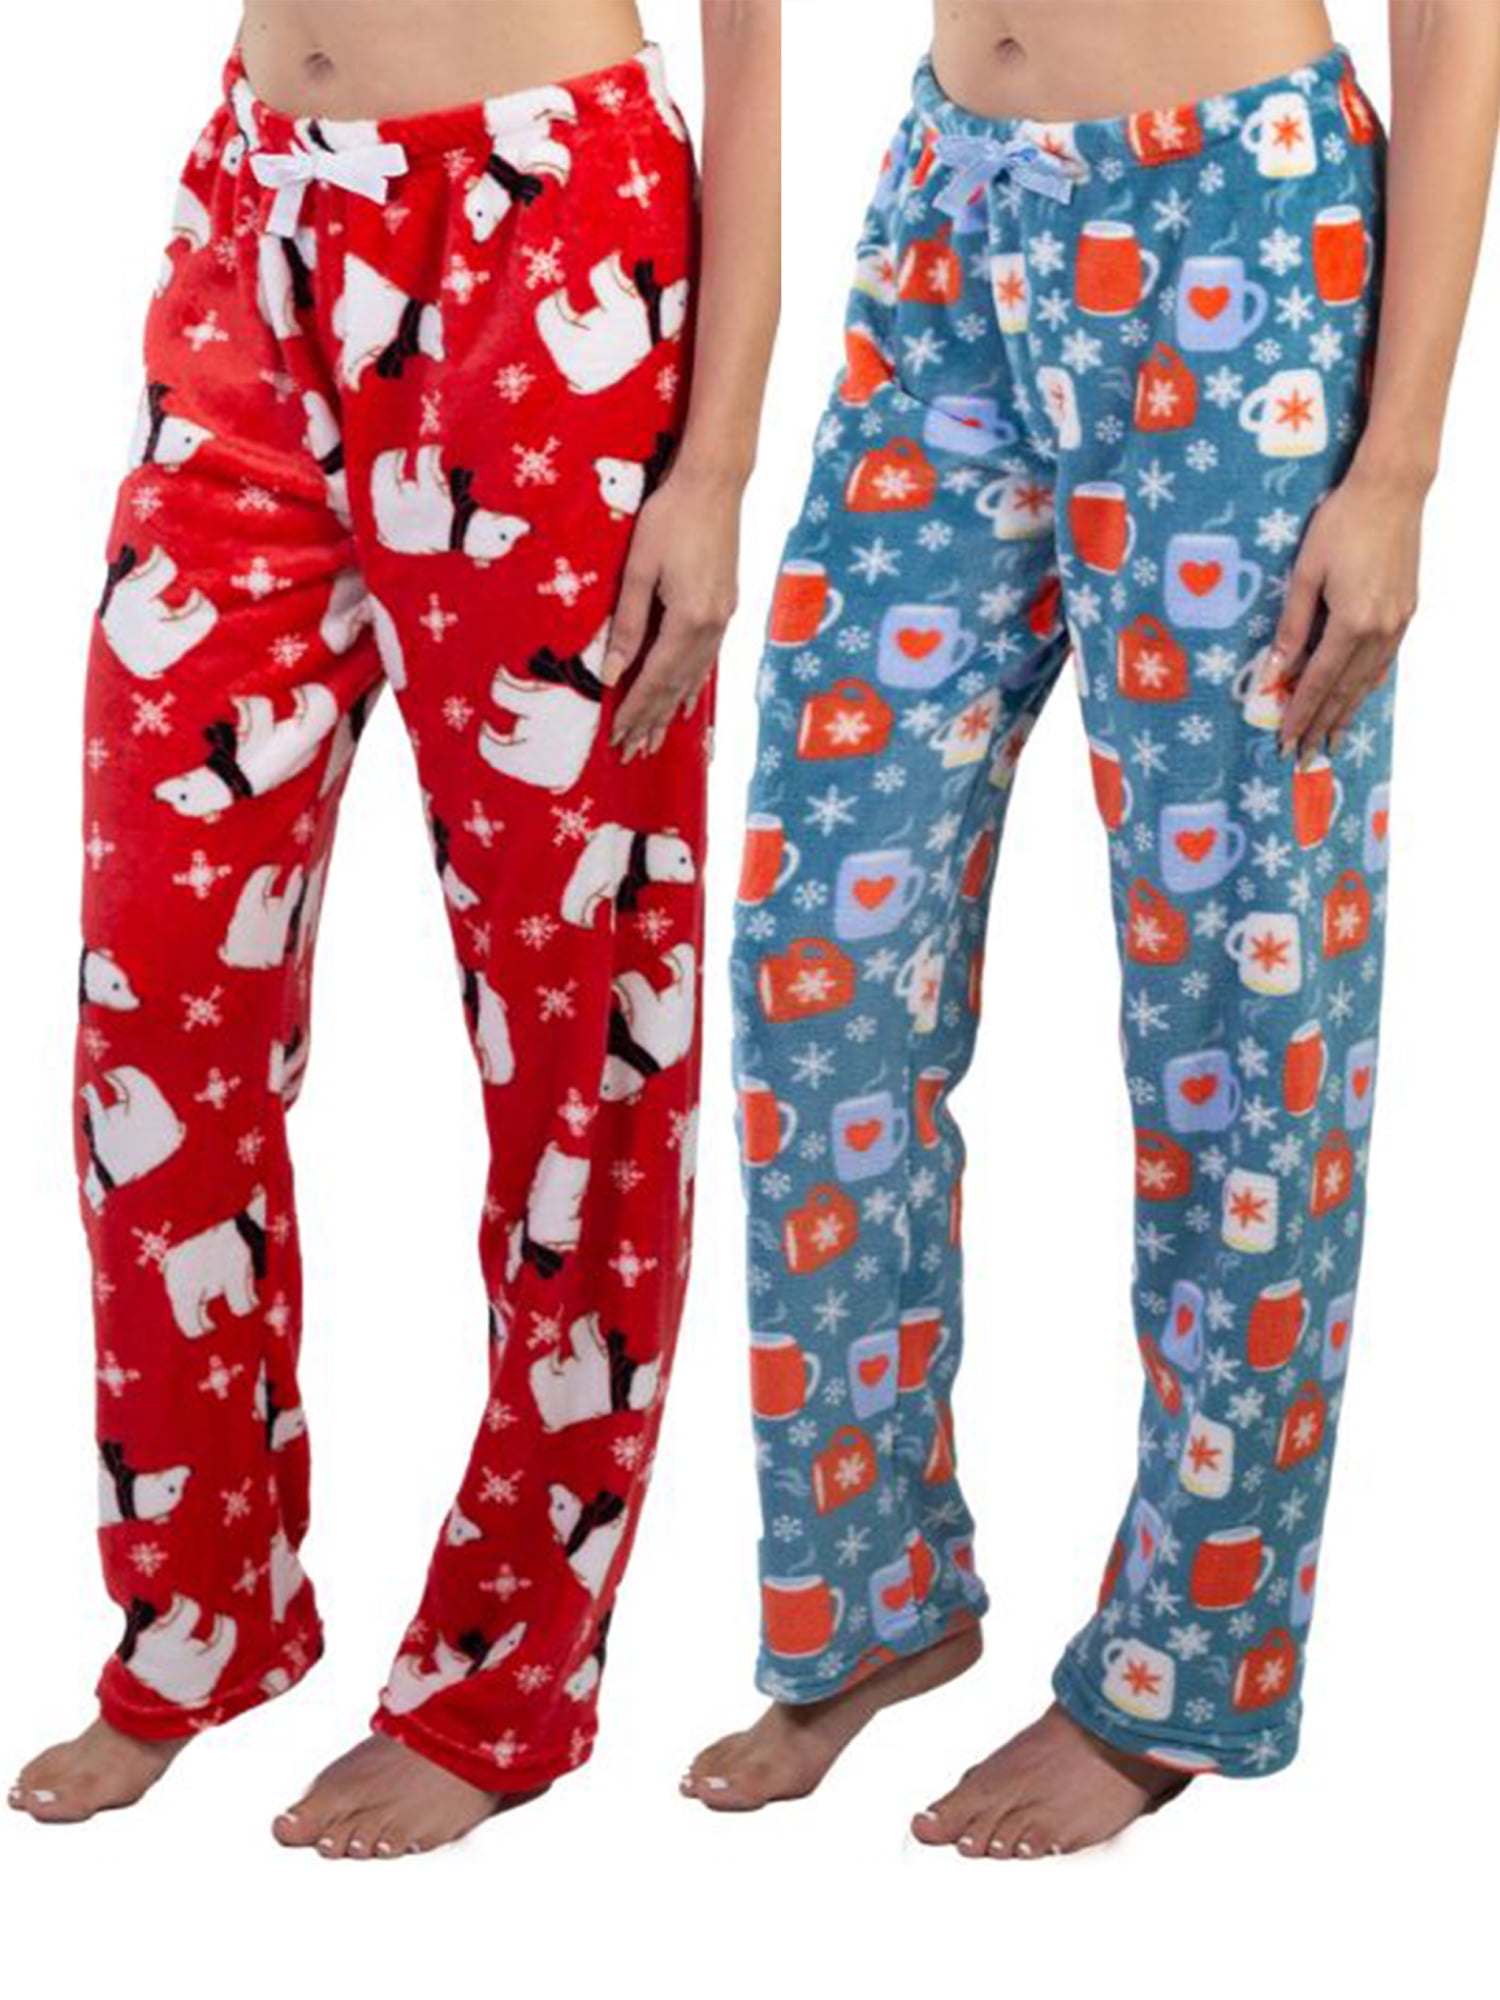 Jo & Bette Women’s Plush Pajama Lounge Pants, PJ Sleep Pants, XS-3XL, 2 Pack